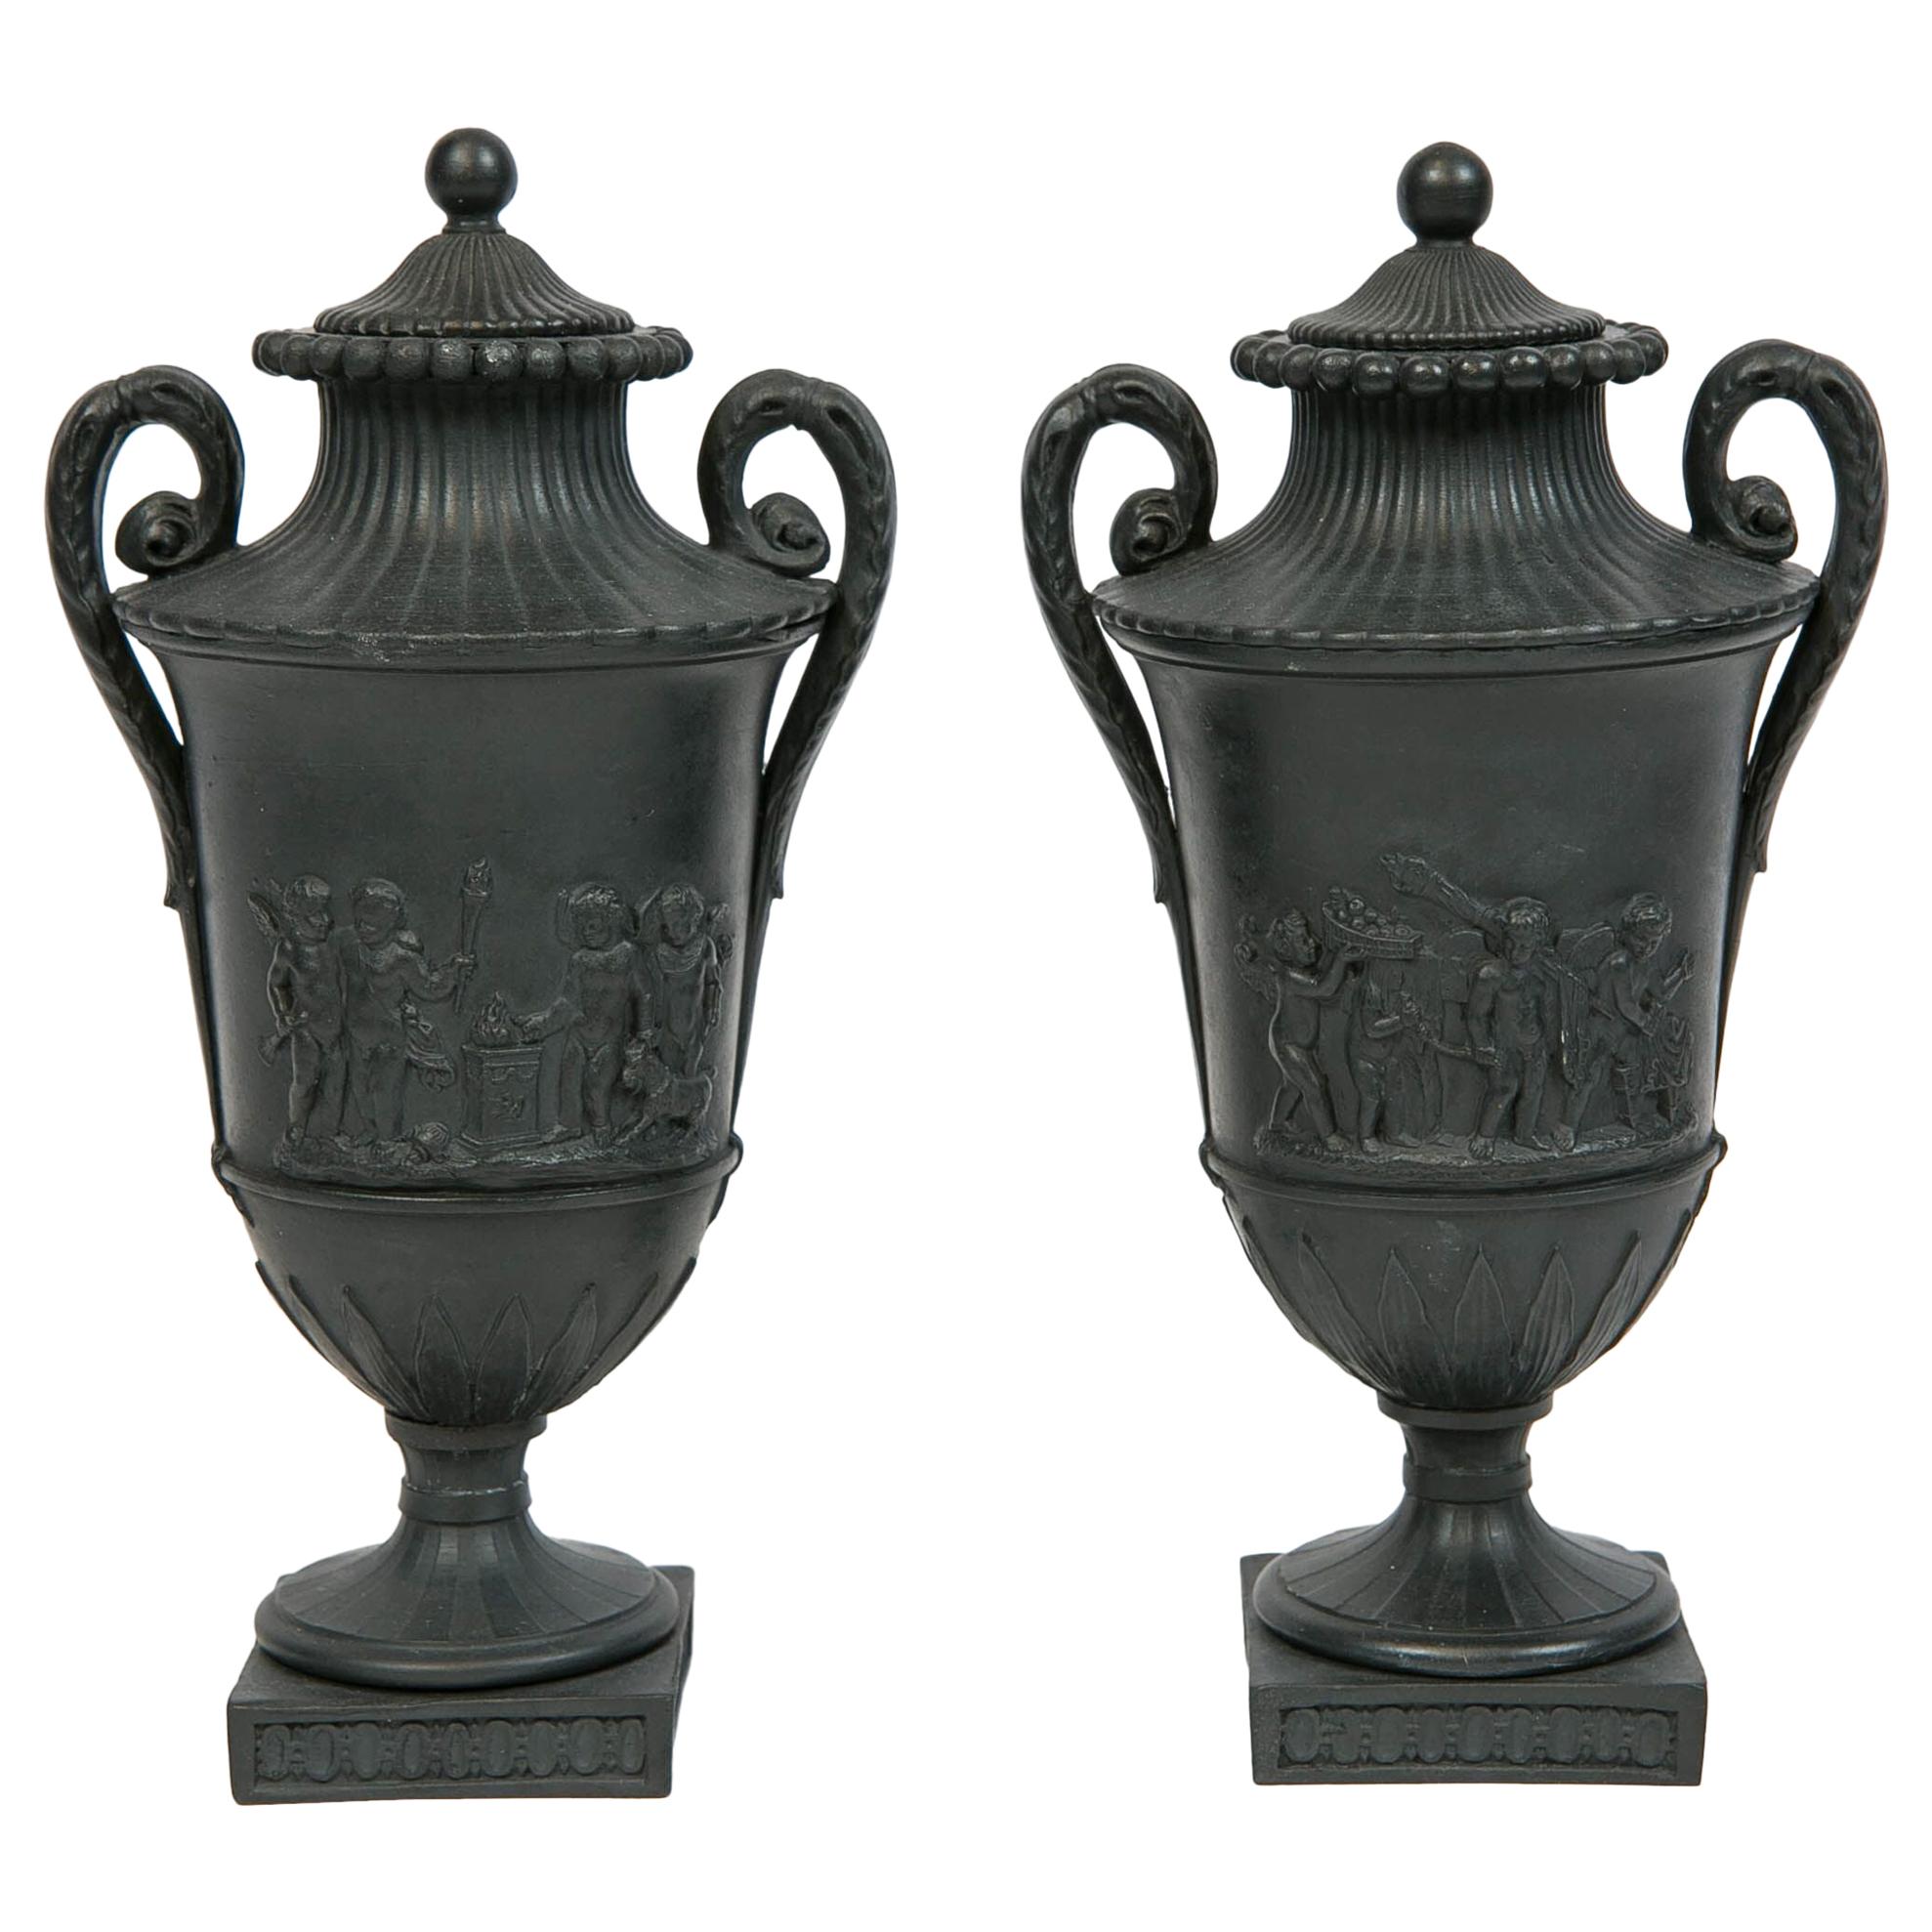 Pair of Small Wedgwood Black Basalt Vases Made circa 1800